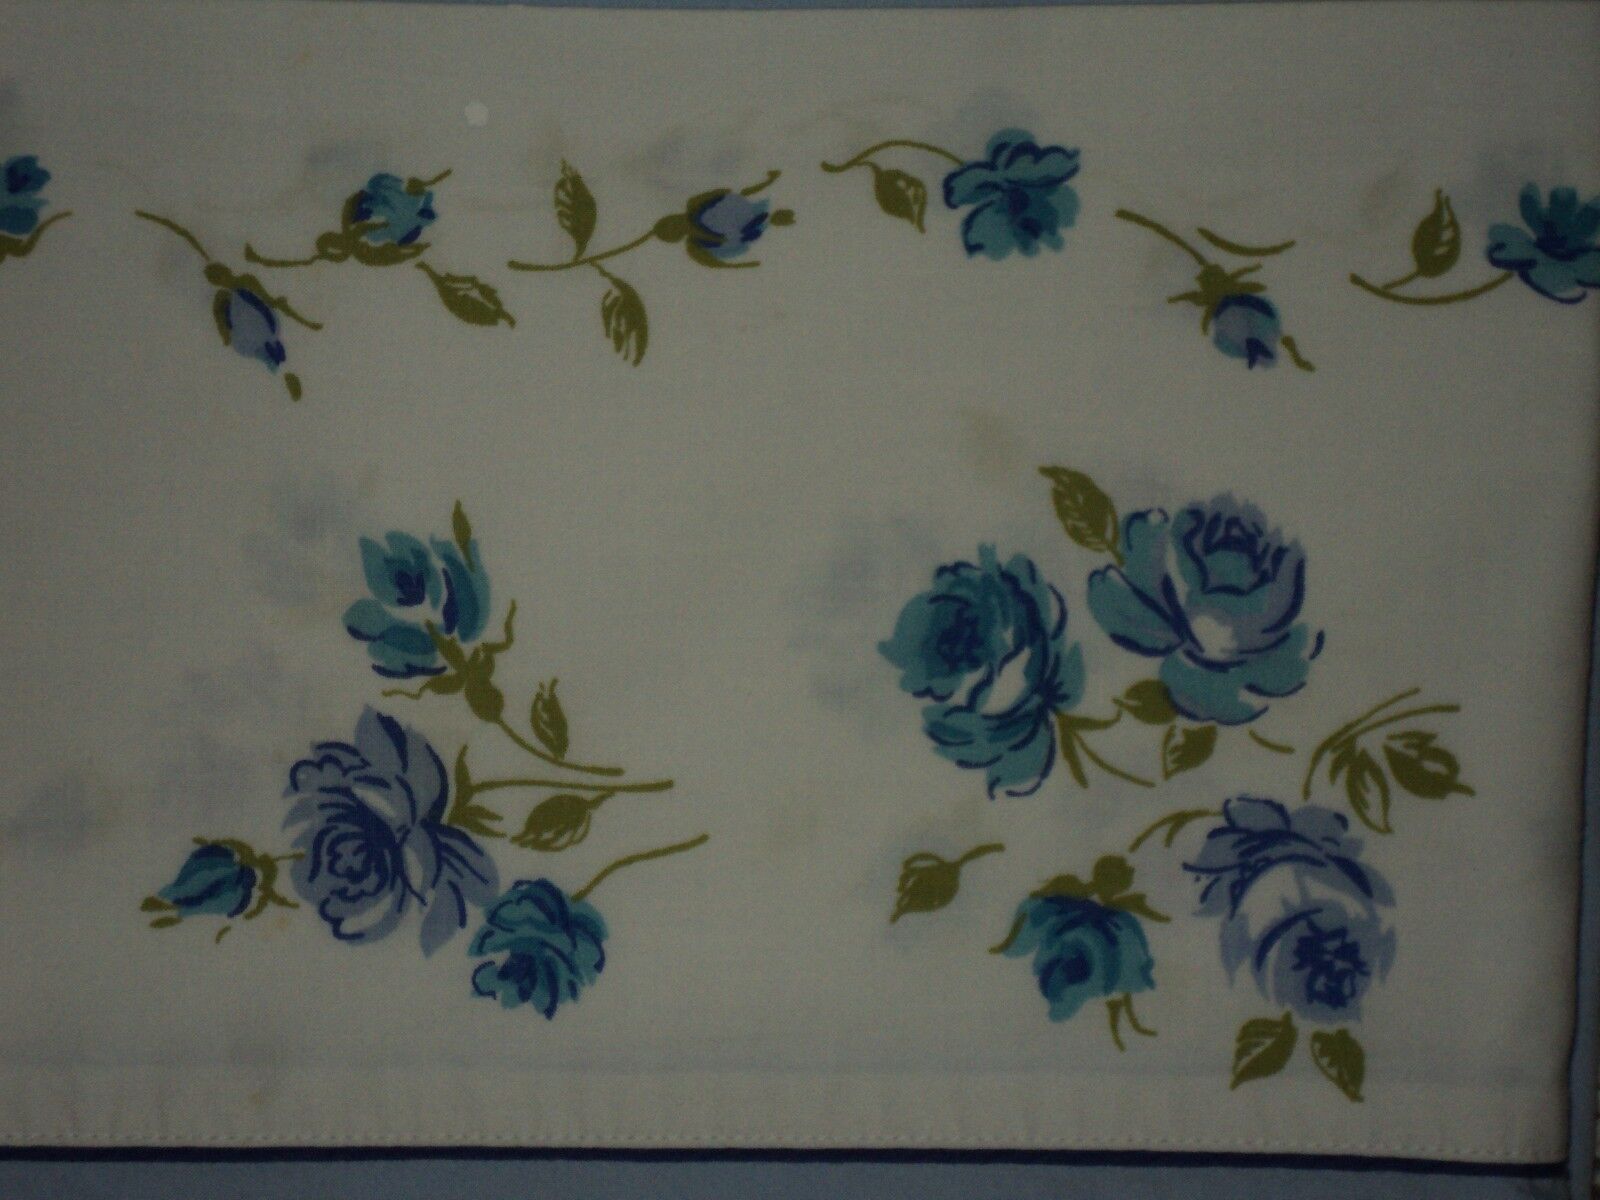 Vintage STEVENS UTICA MOHAWK Solid Blue Floral Cuff Flat Sheet Twin Size Cotton